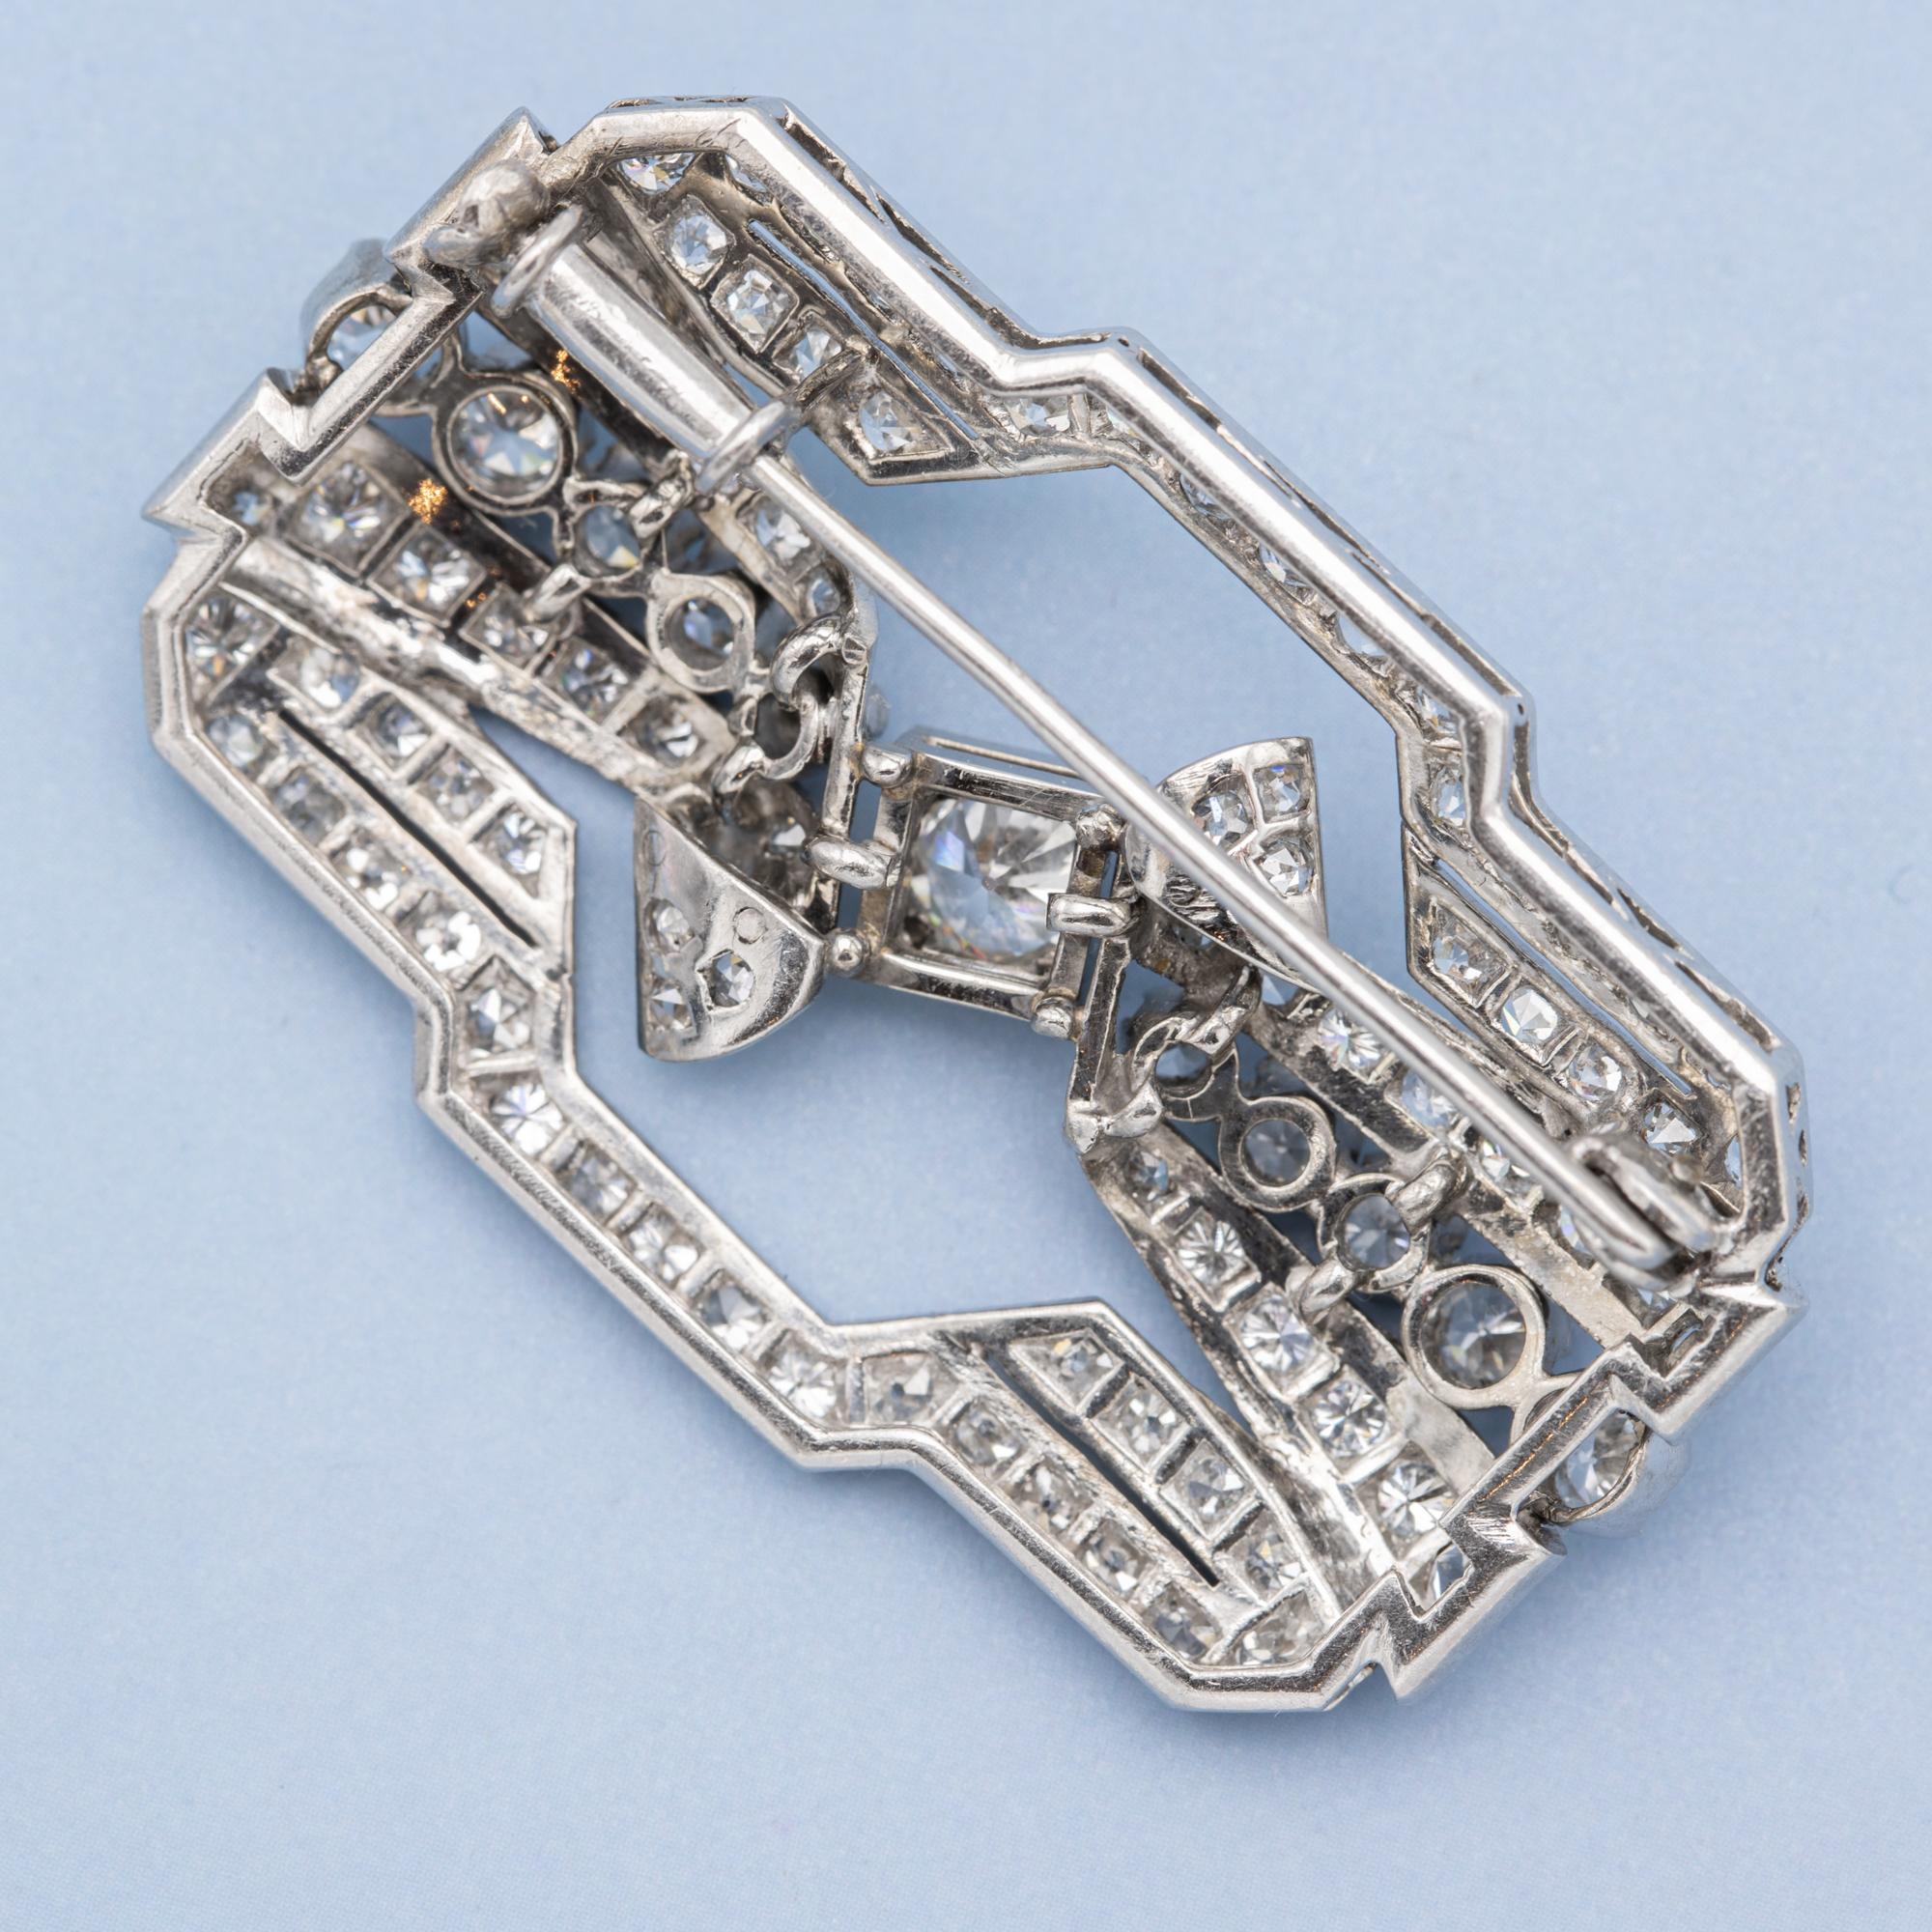 Art Deco brooch - 3.1 ct diamond - Old cut - Antique jewelry - Platinum 1930  For Sale 1